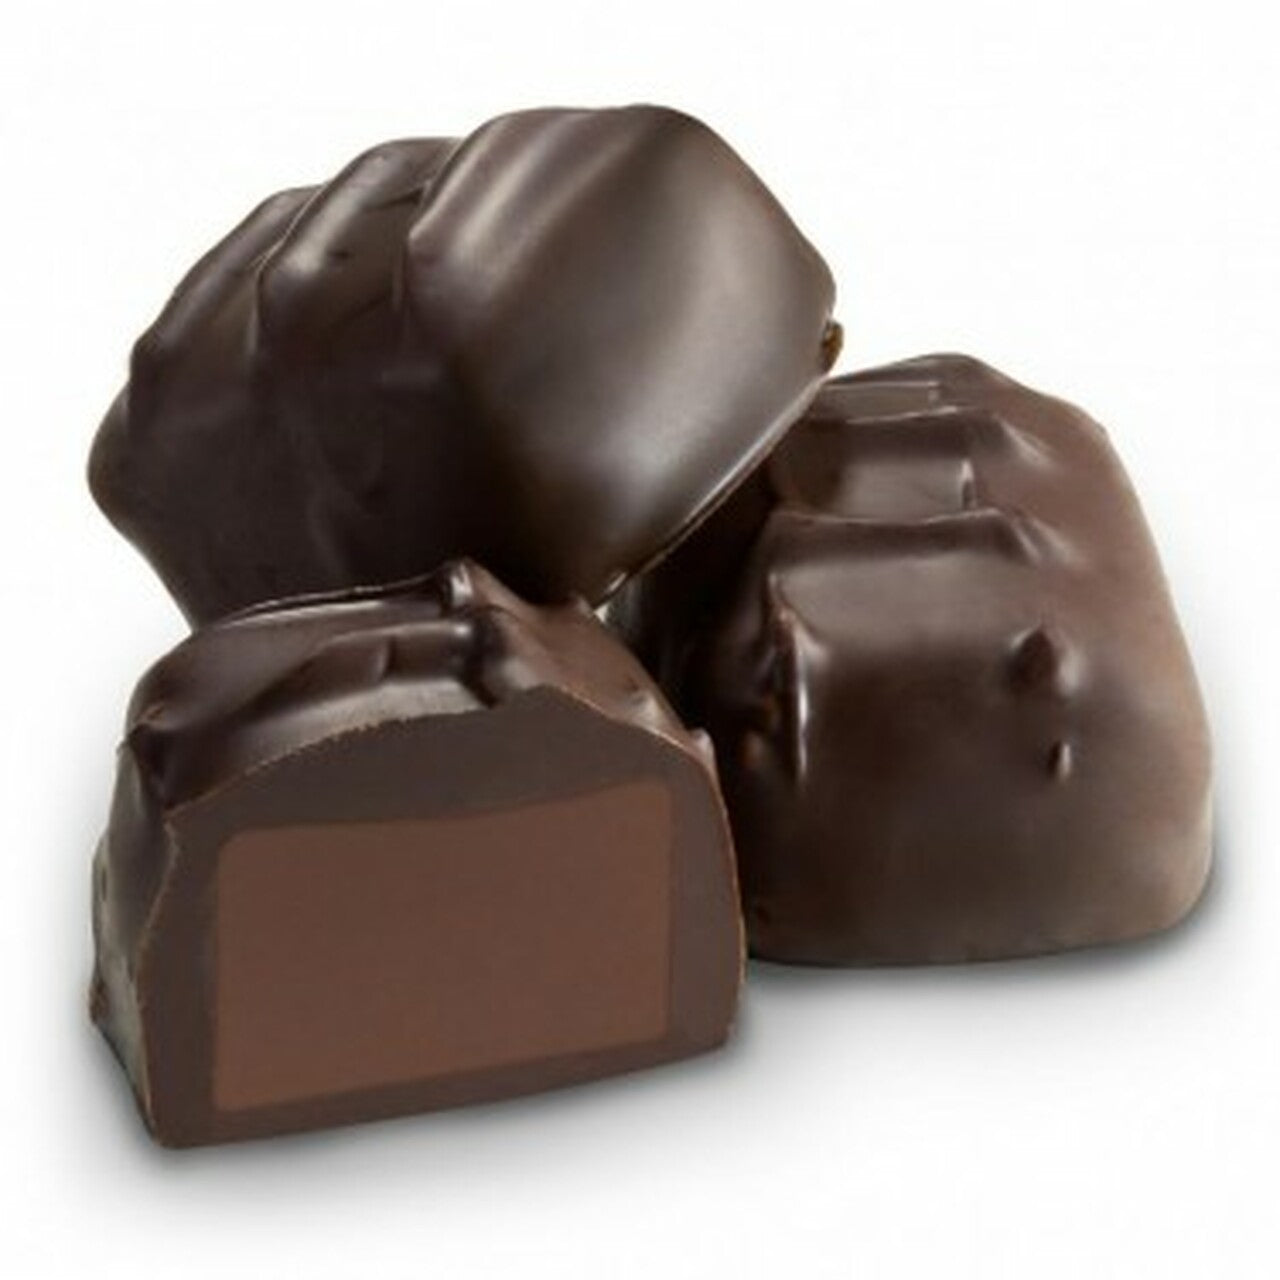 Mint Meltaways Coated in Dark Chocolate